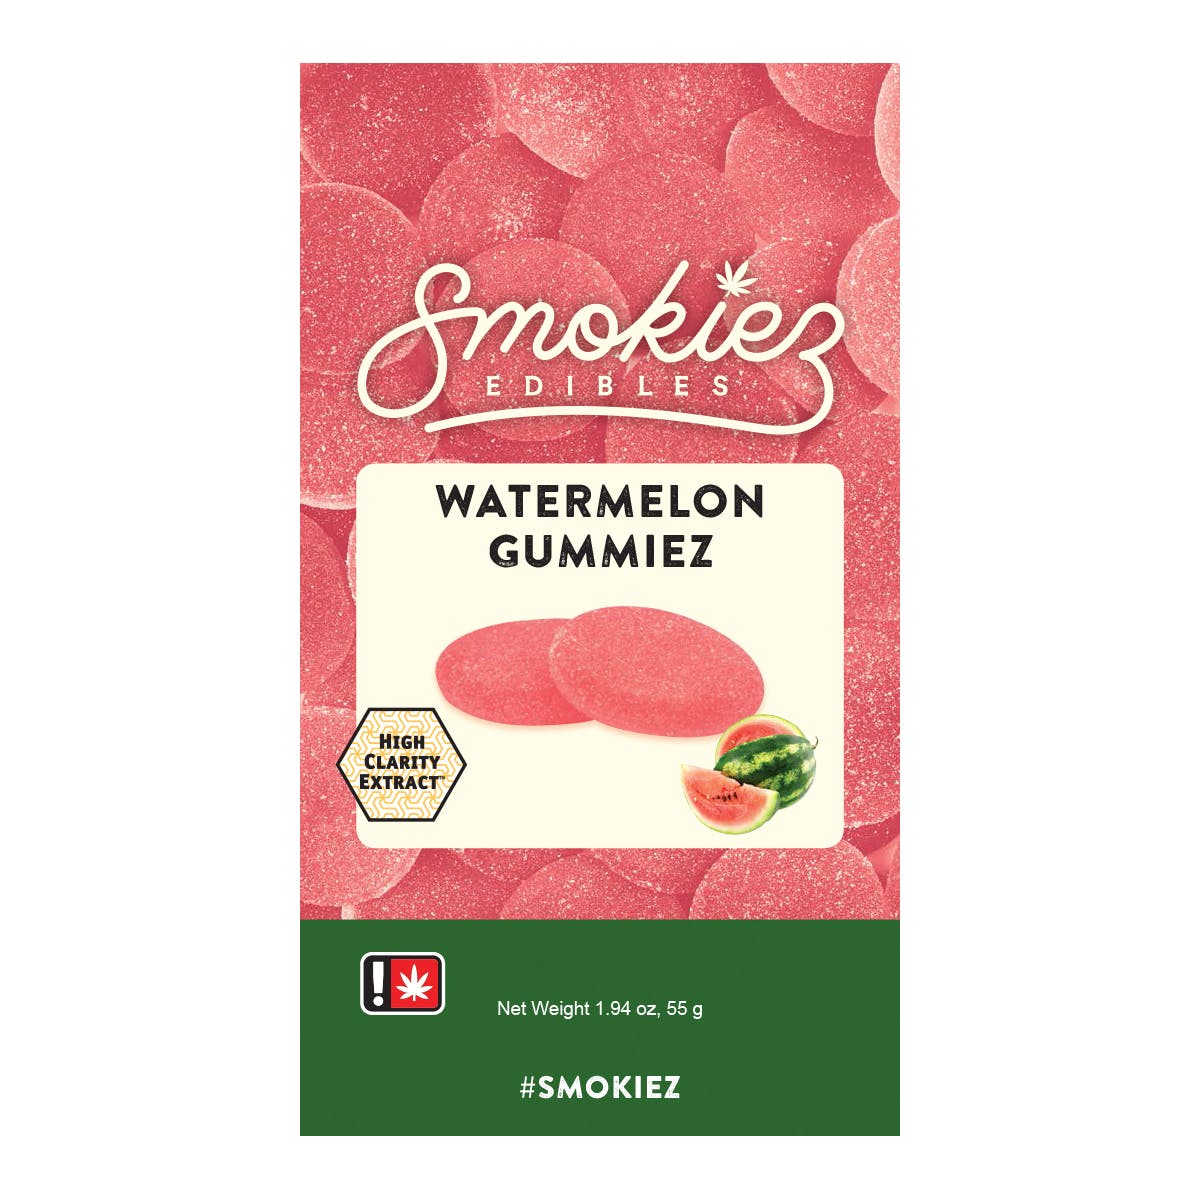 edible-smokiez-edibles-watermelon-gummiez-2c-50-mg